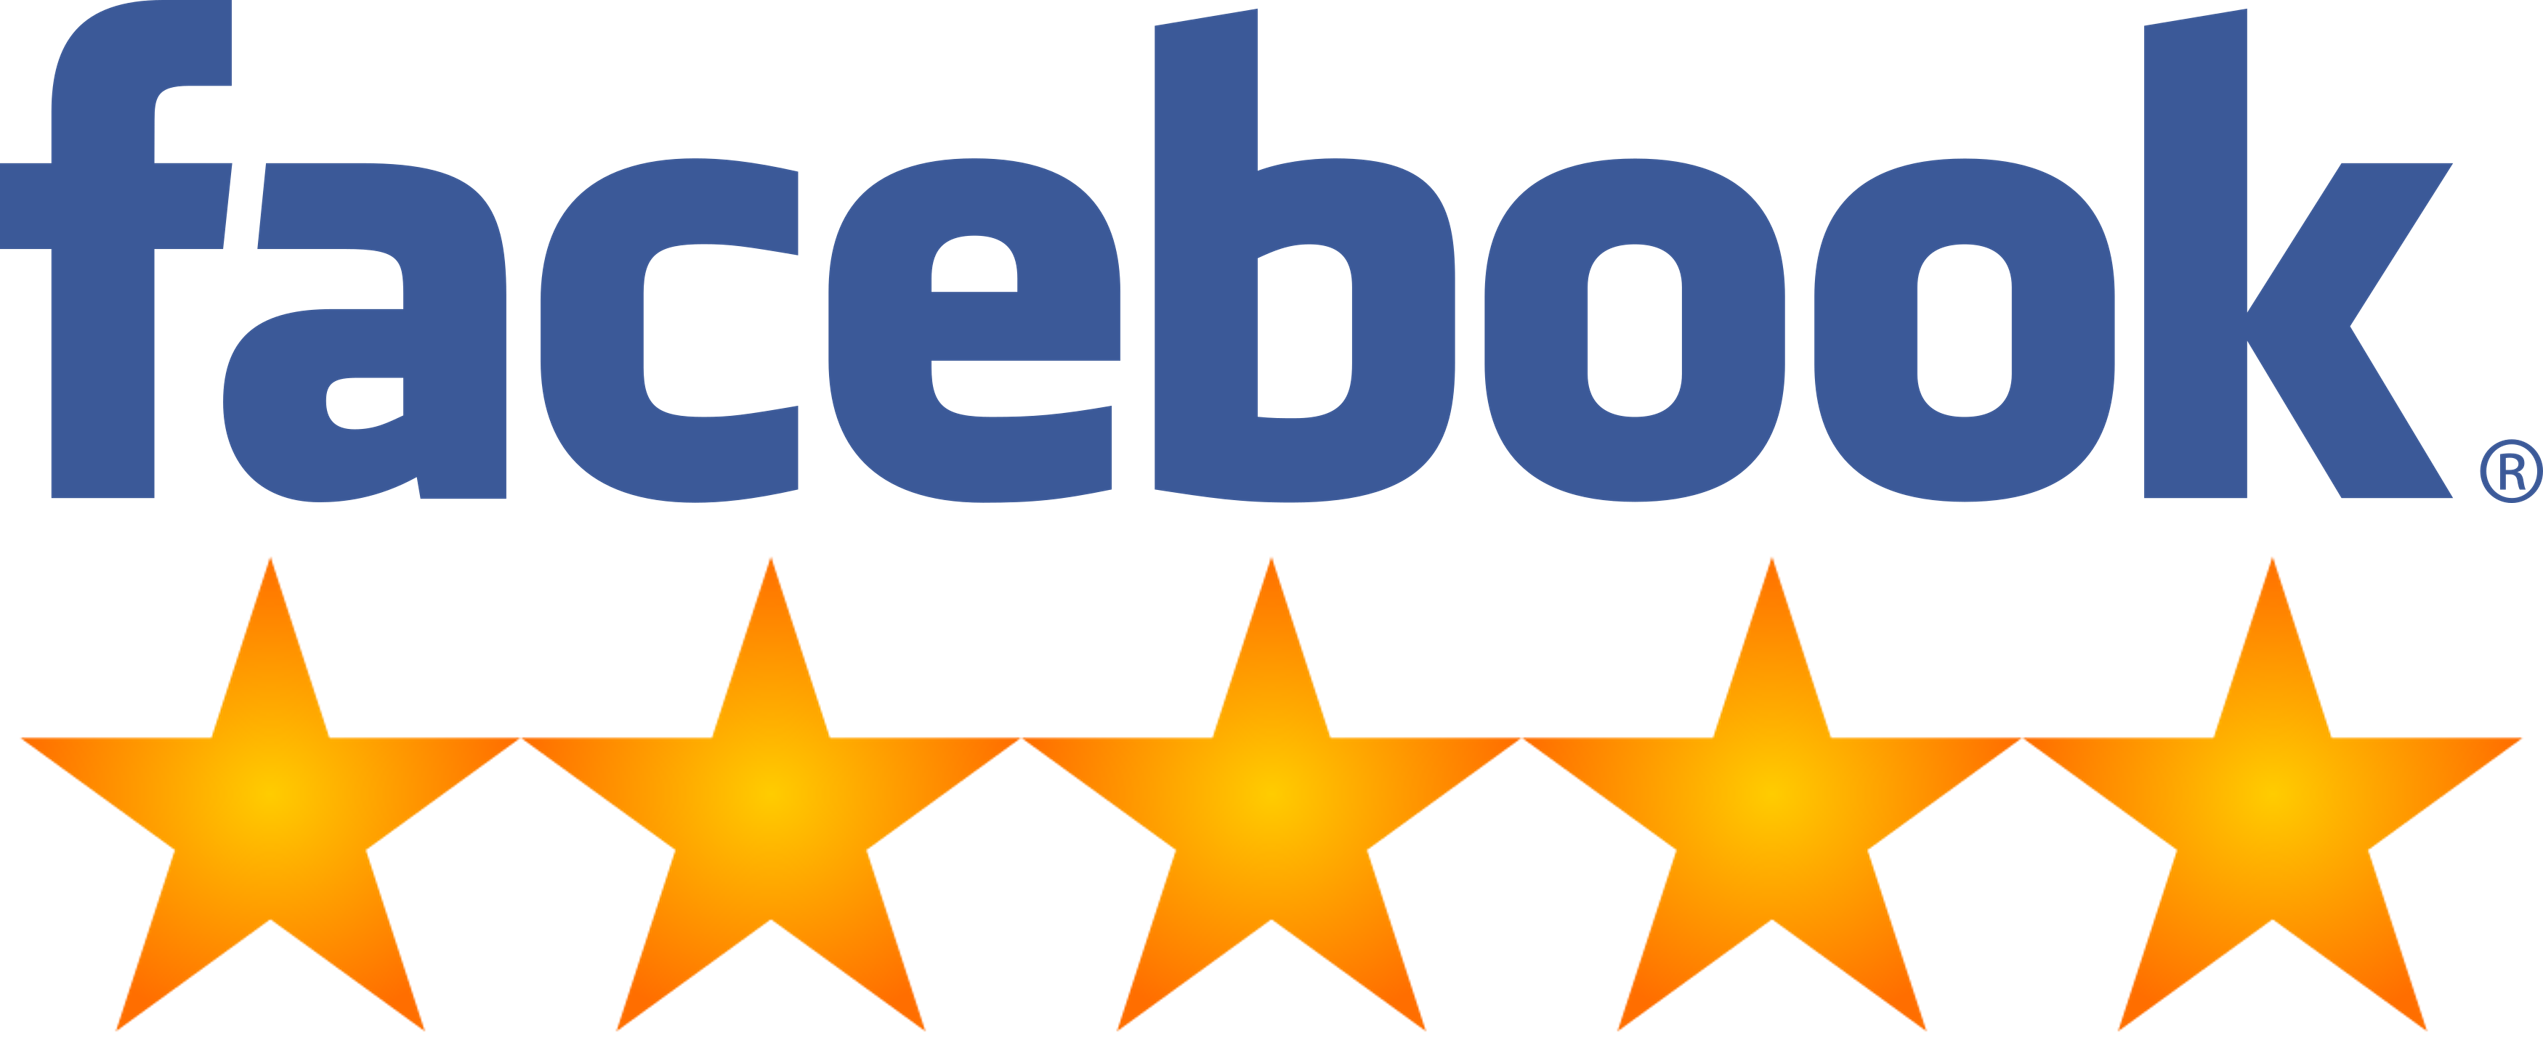 Facebook-5-Star-Reviews-logo